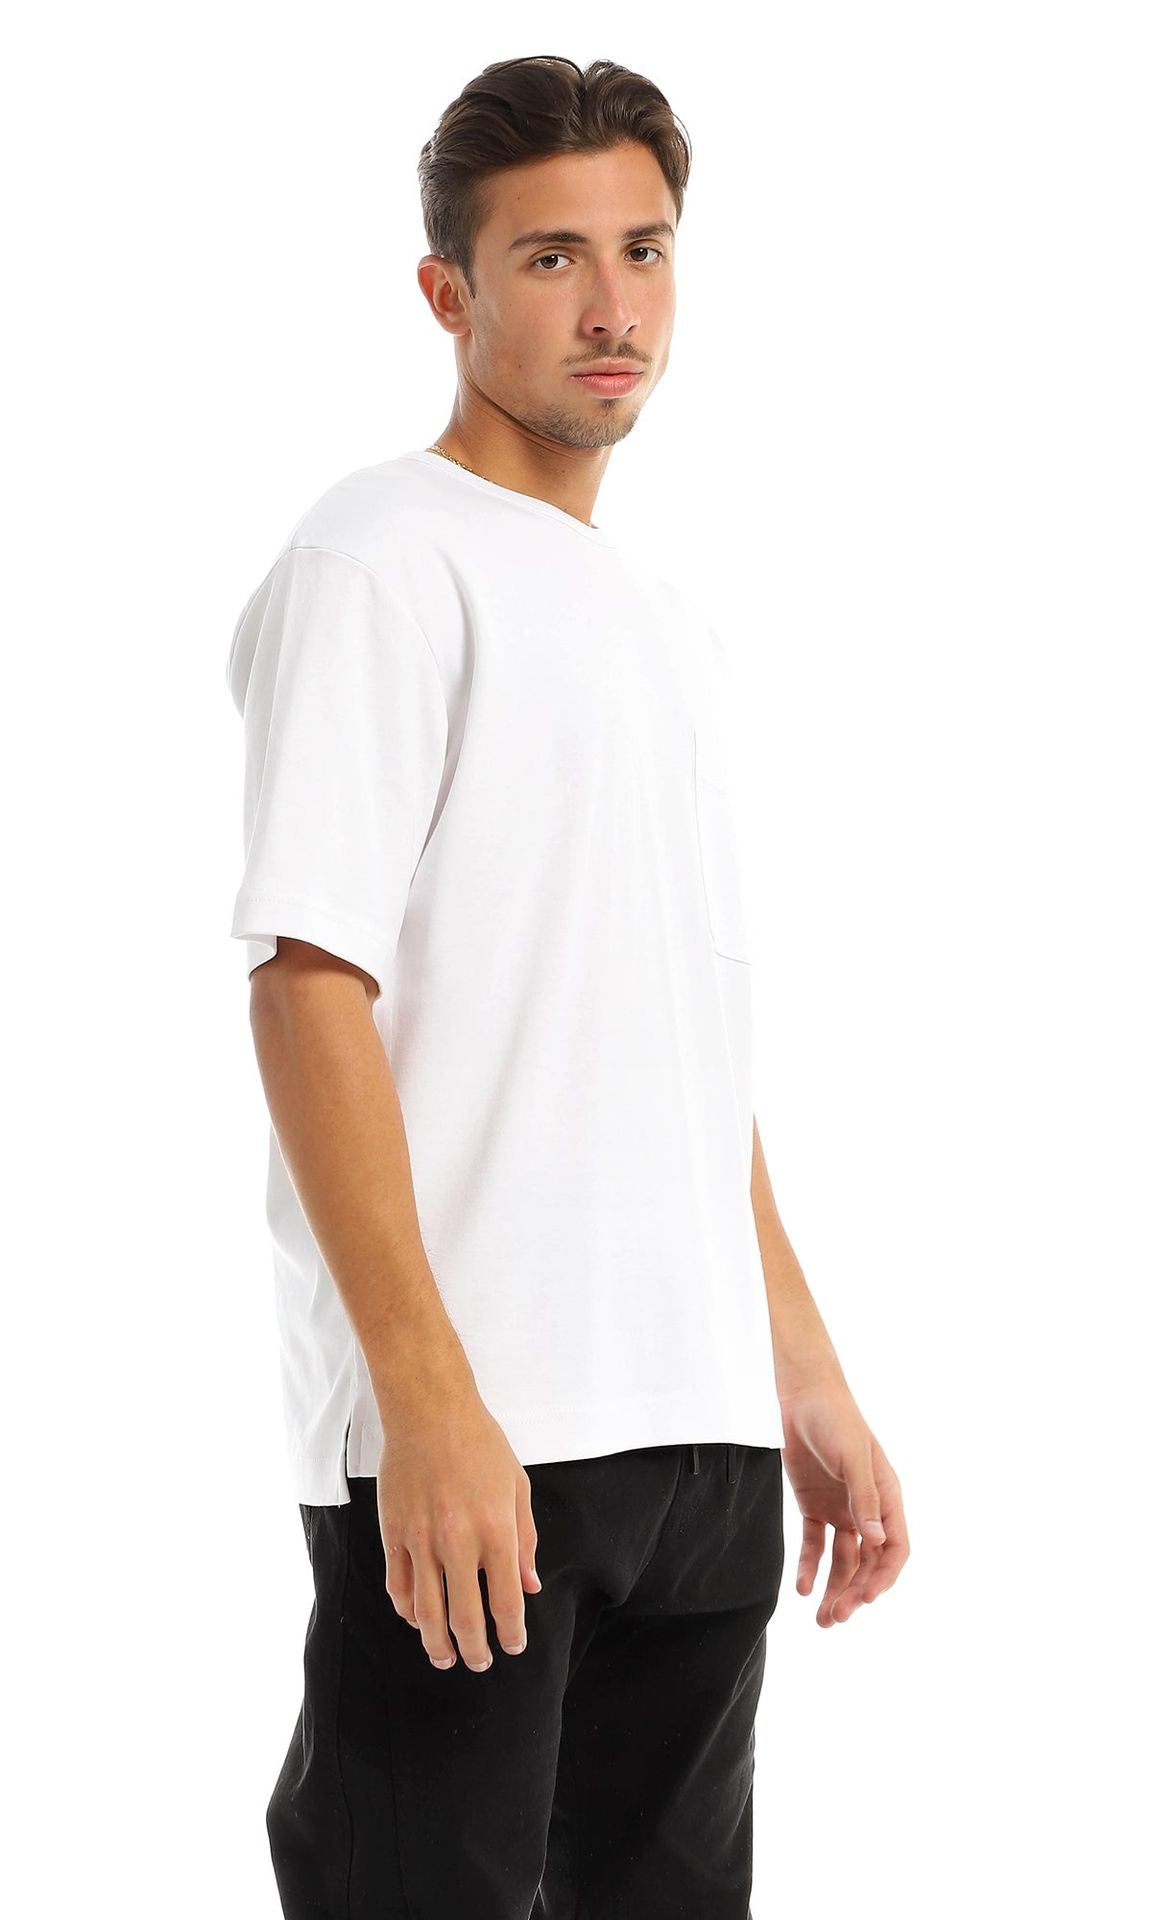 97708 Basic Round Patched Pocket White T-Shirt